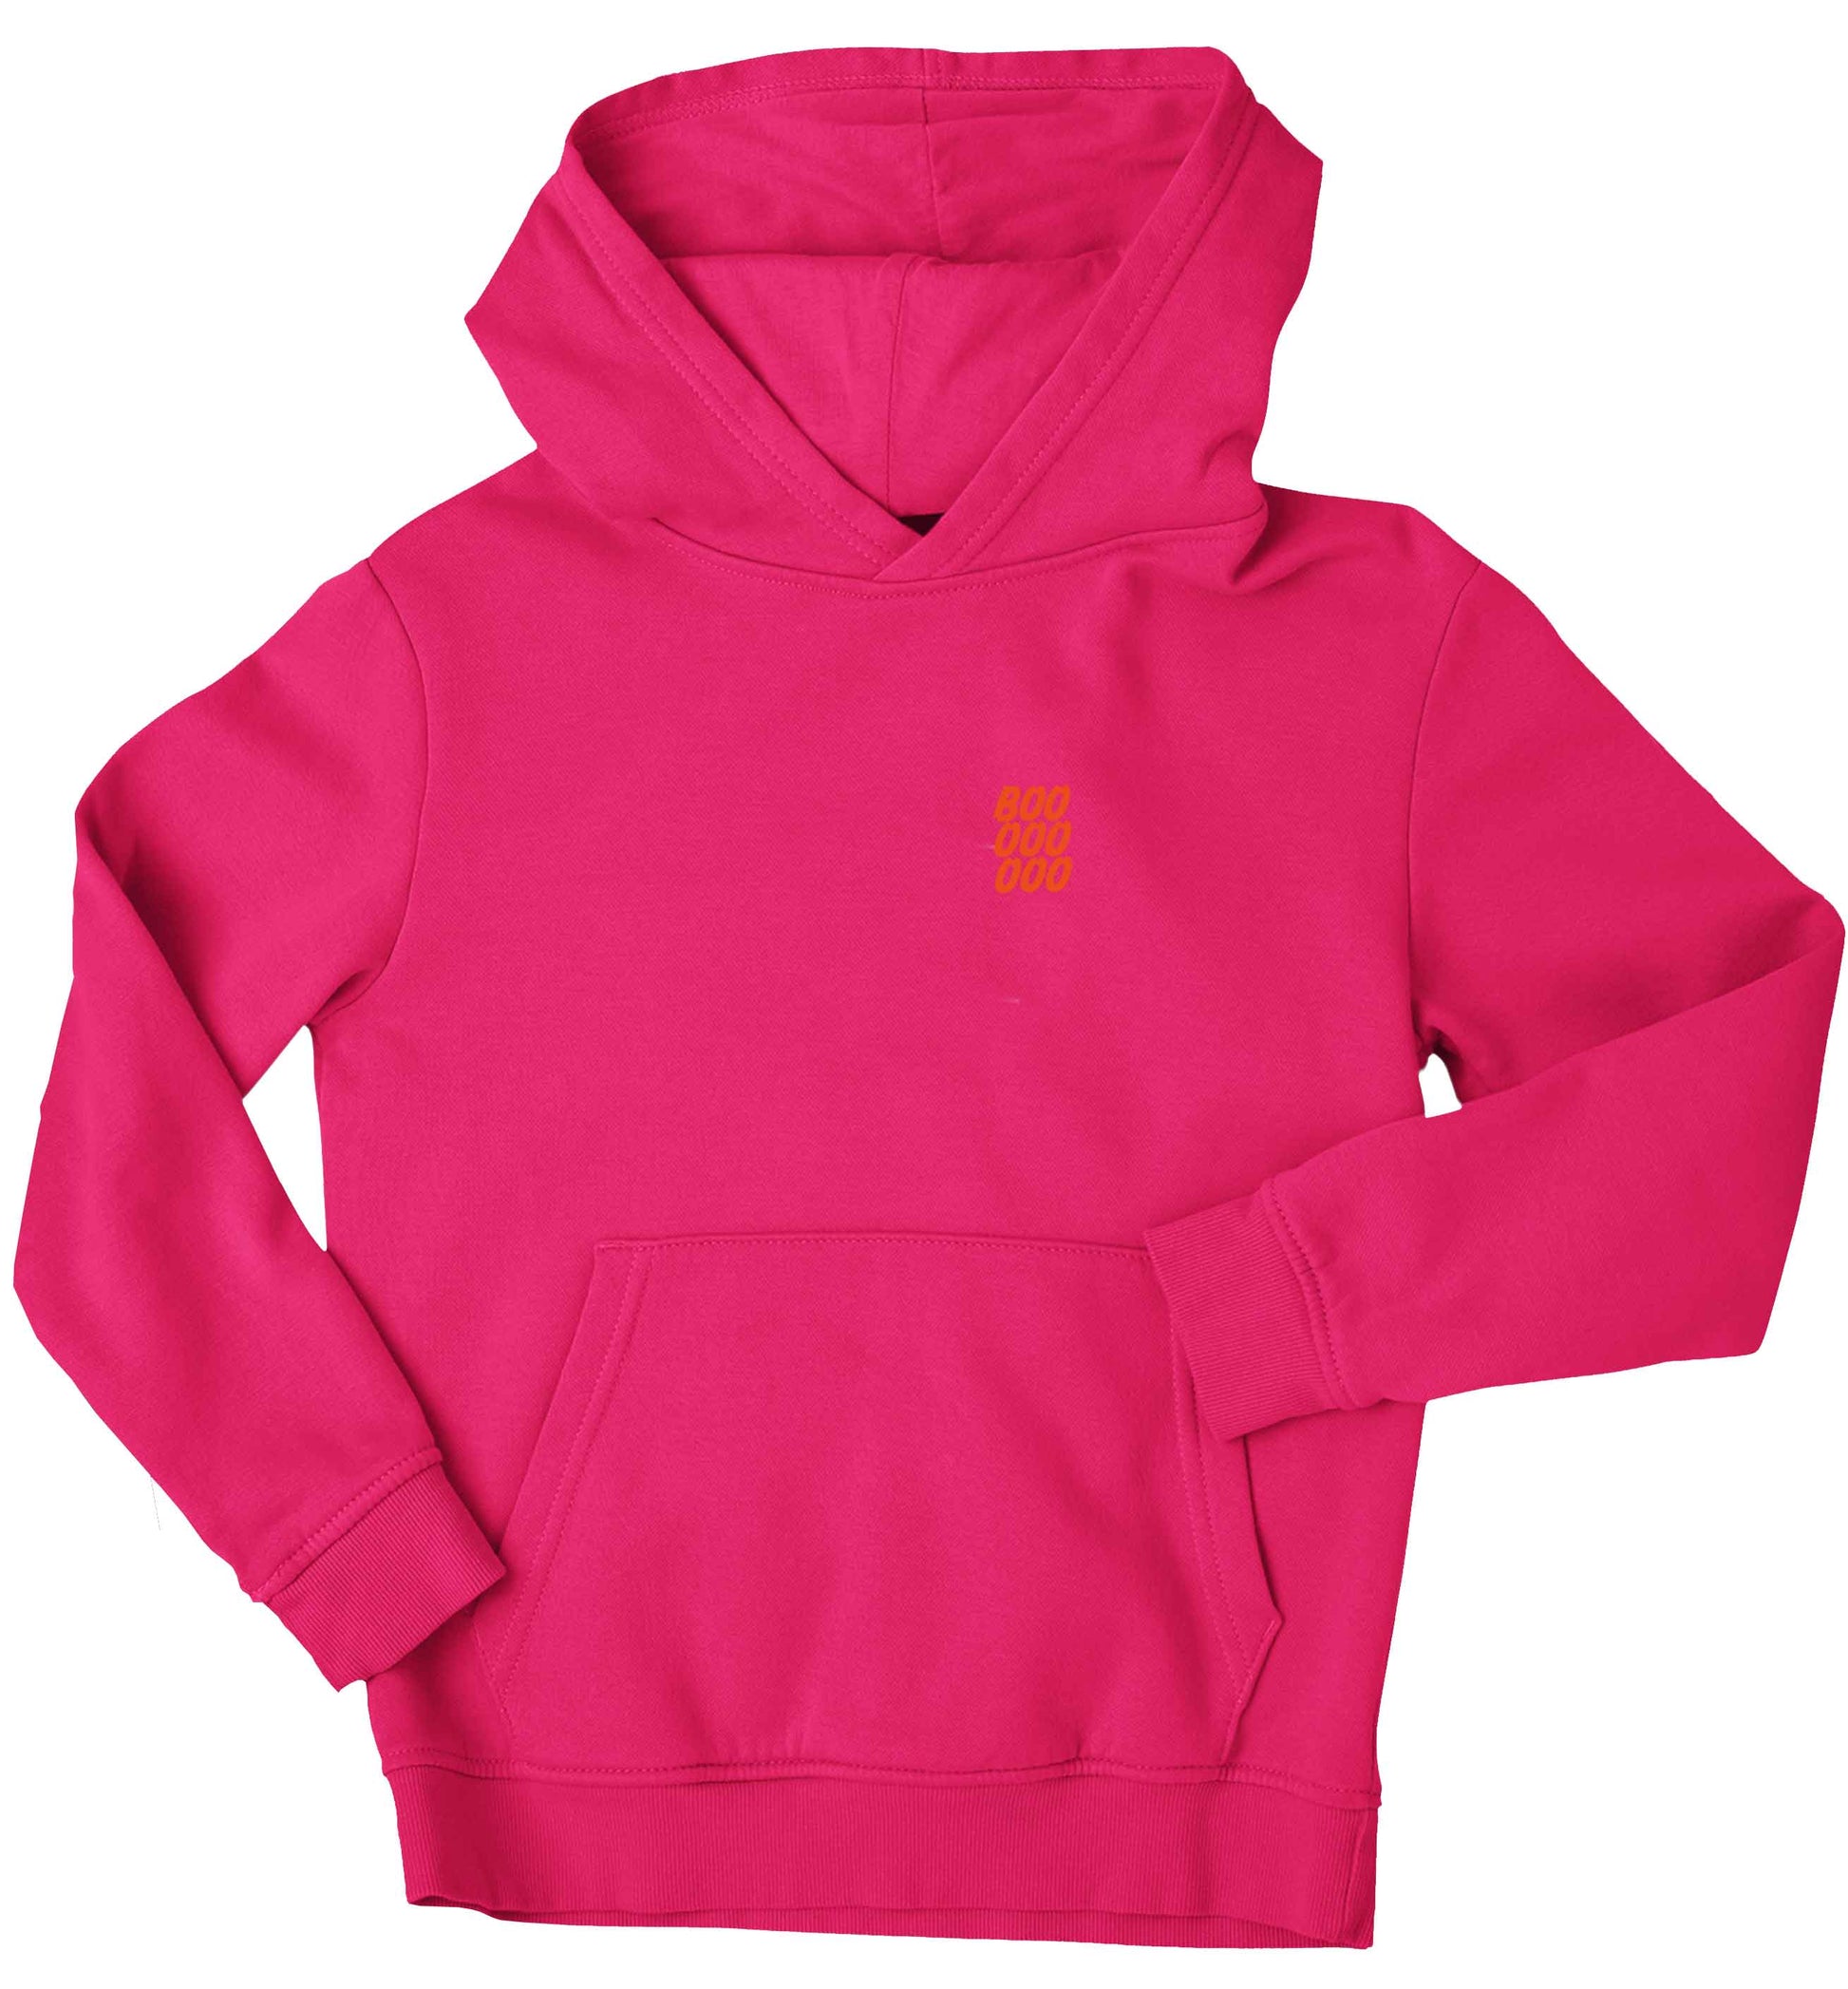 Boo pocket children's pink hoodie 12-13 Years